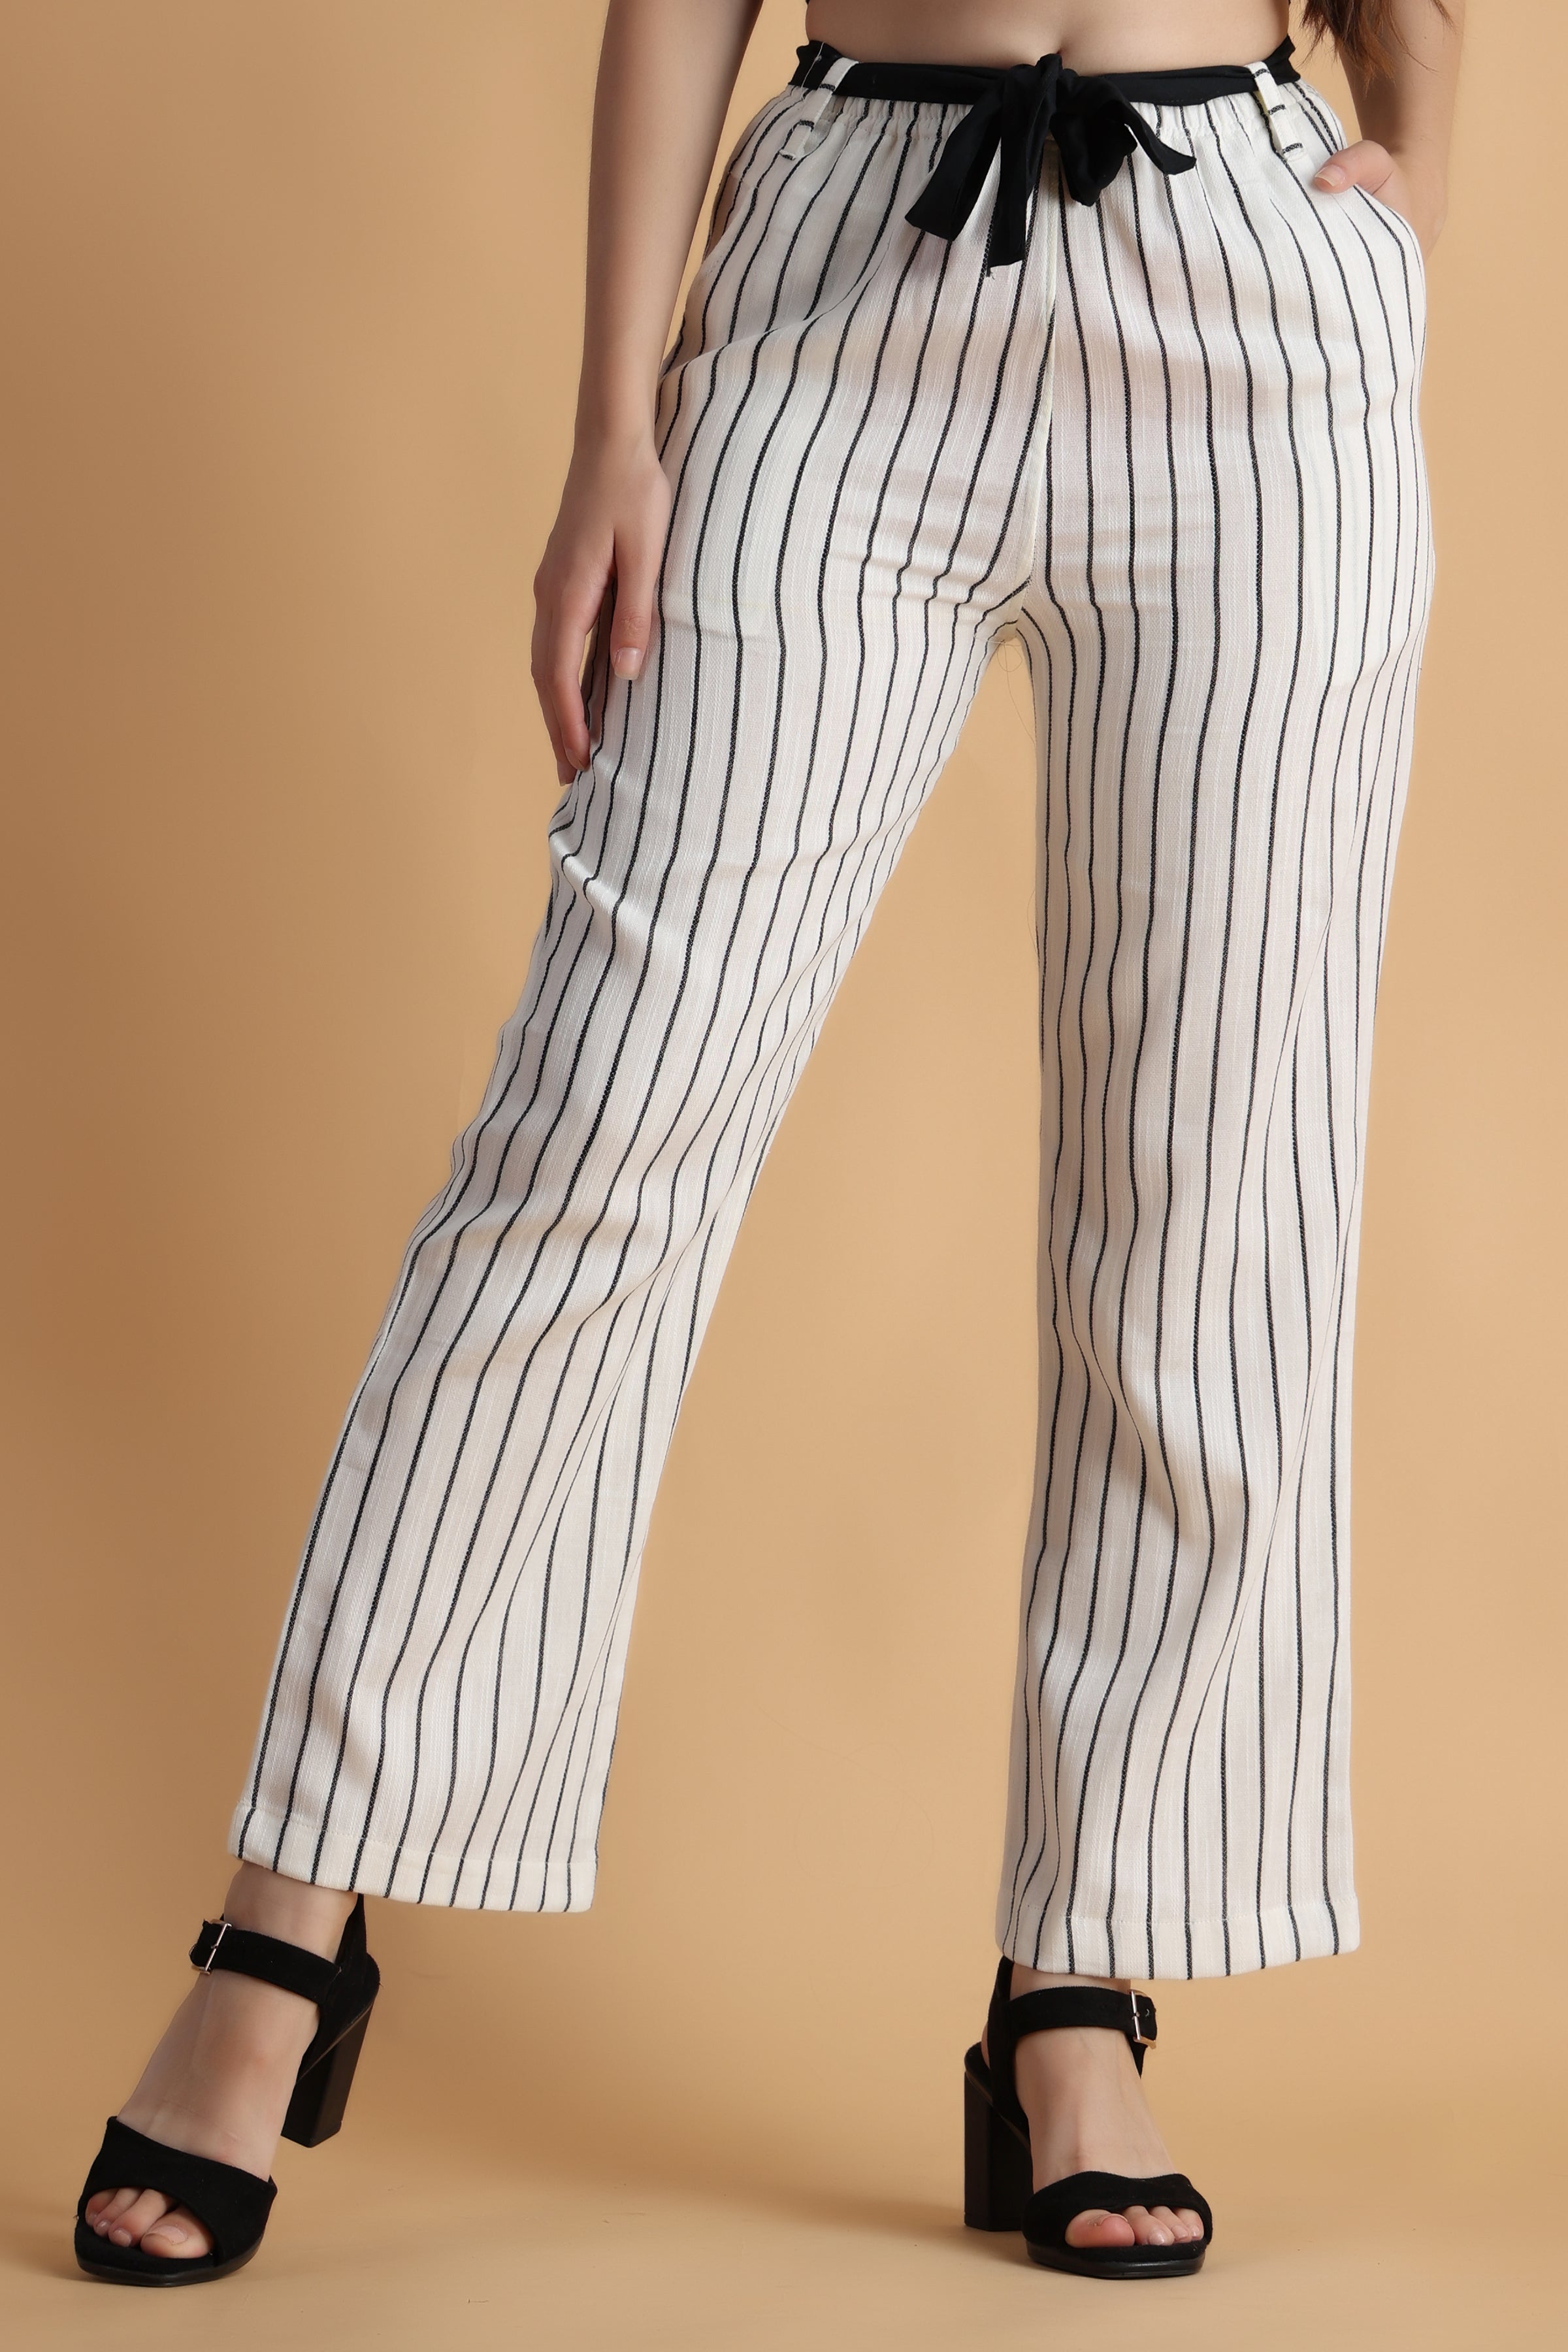 Multi Striped Pant  Buy Now  Overstuffed Closet Boutique  Overstuffed  Closet Boutique